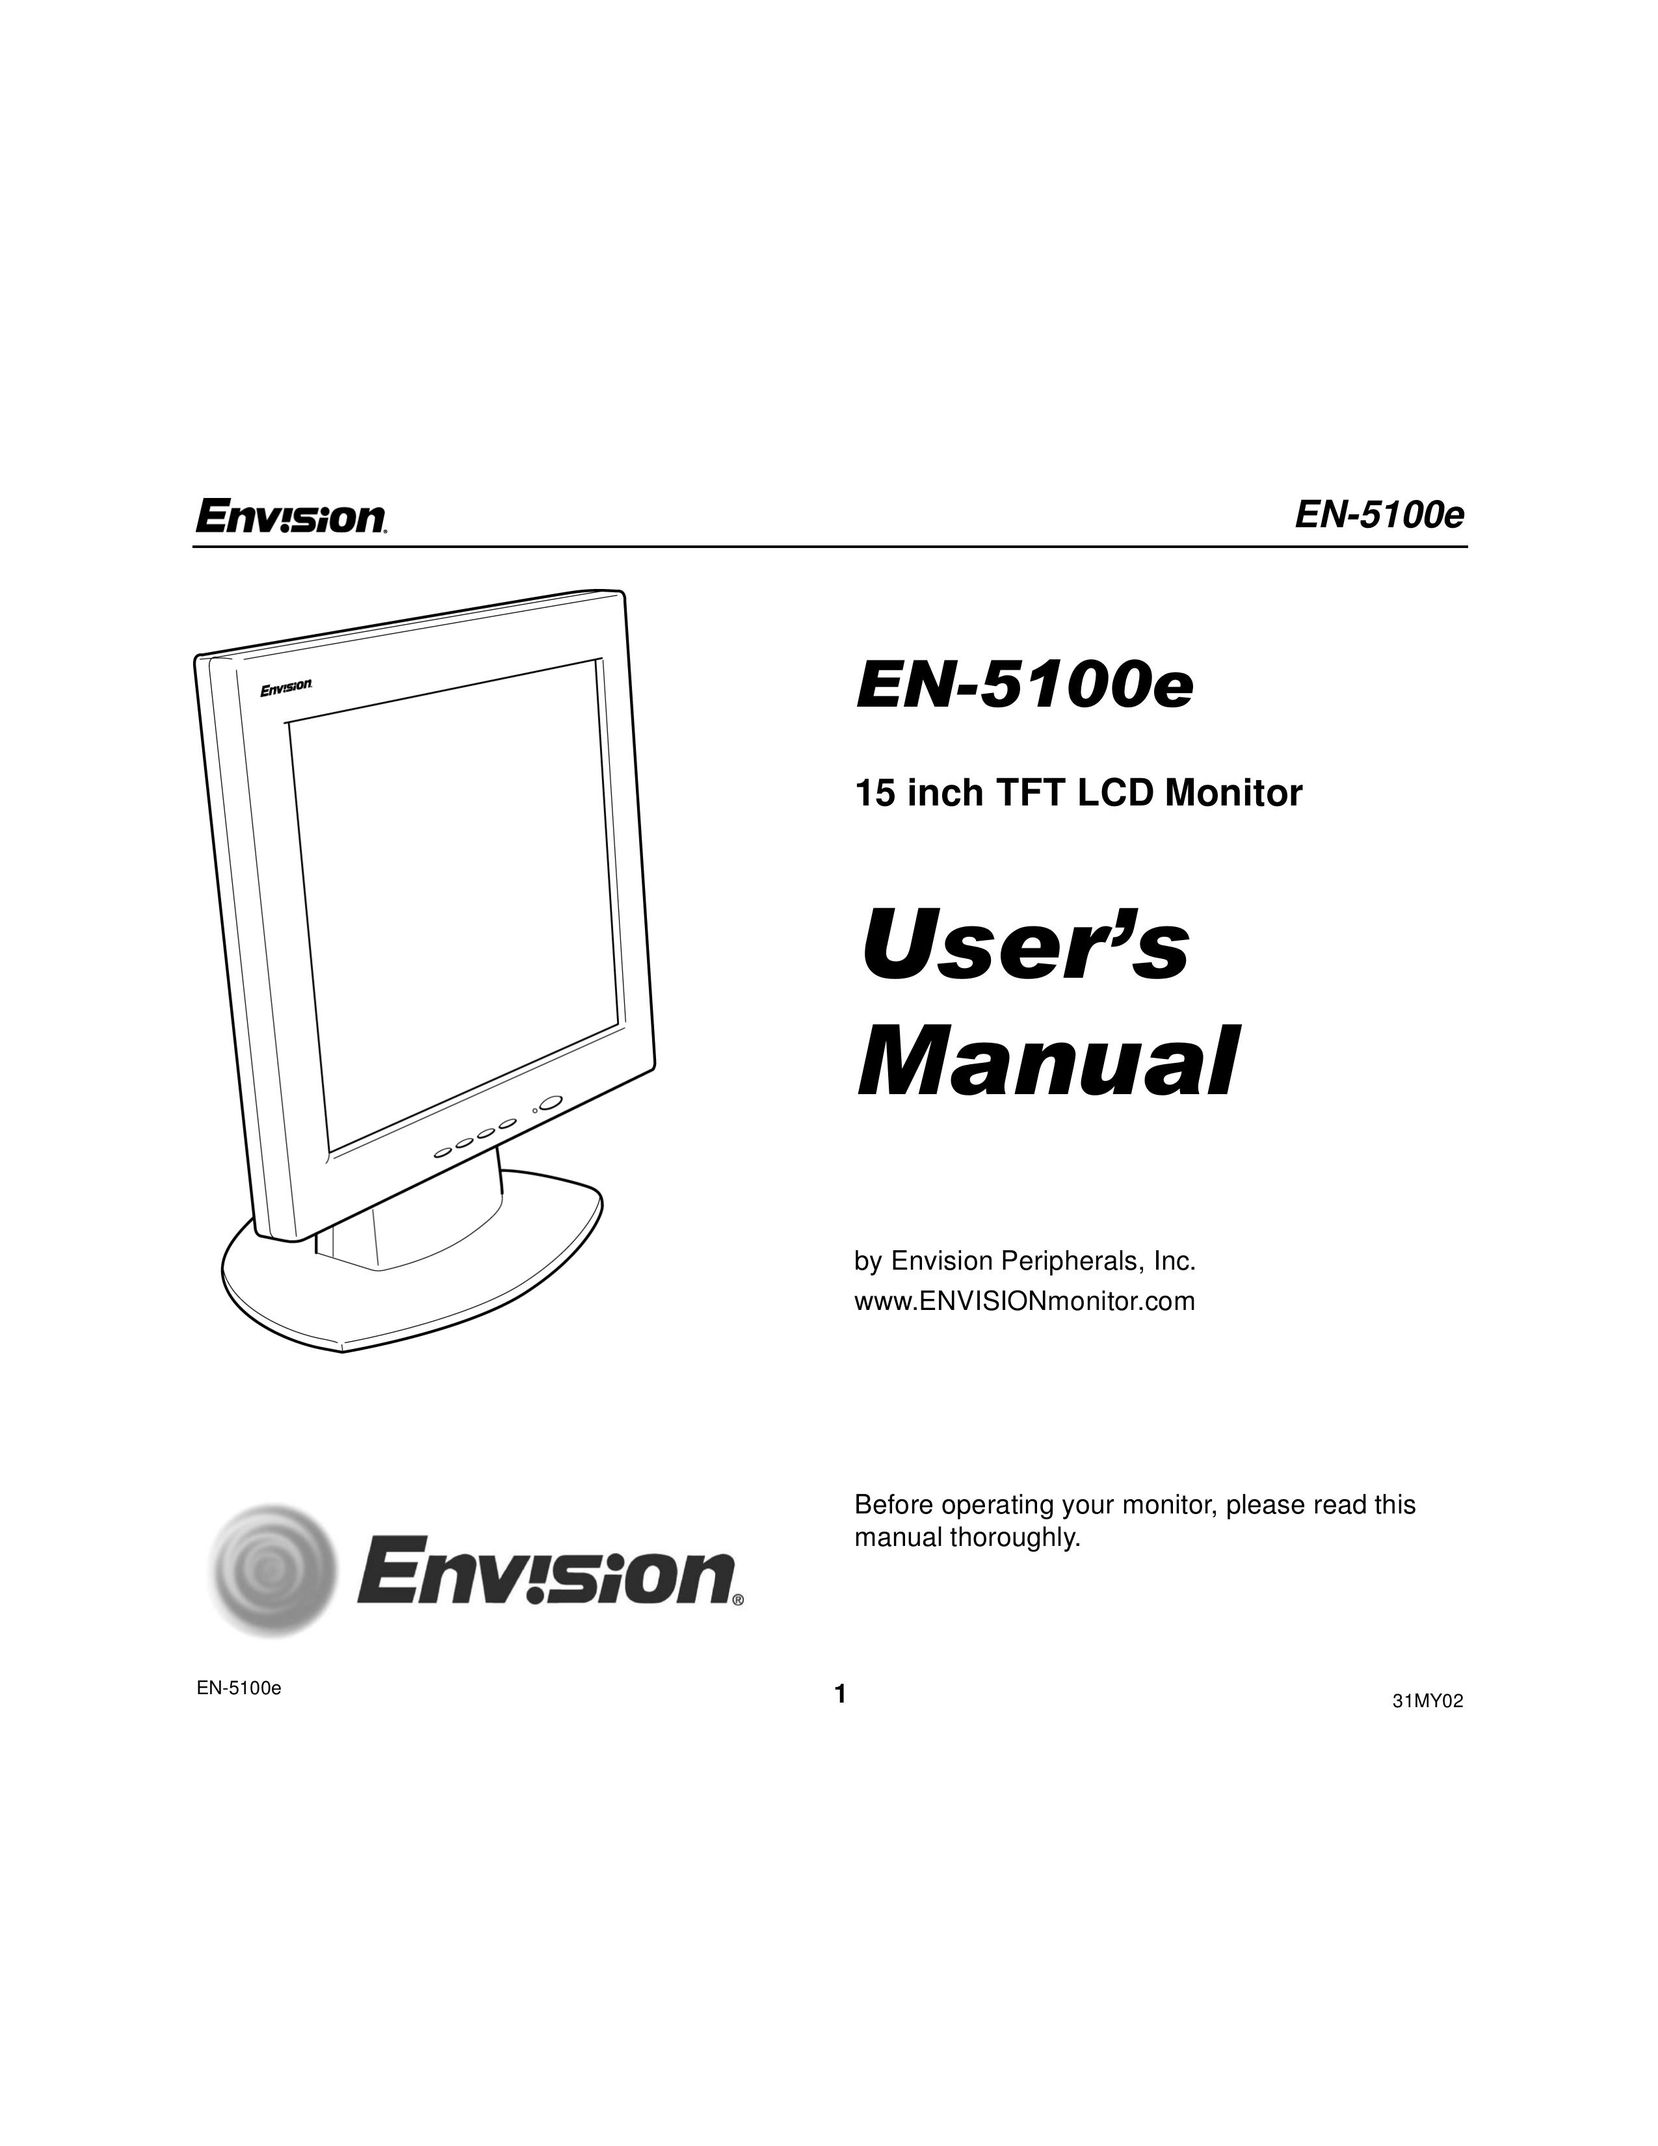 Envision Peripherals EN-5100E Computer Monitor User Manual